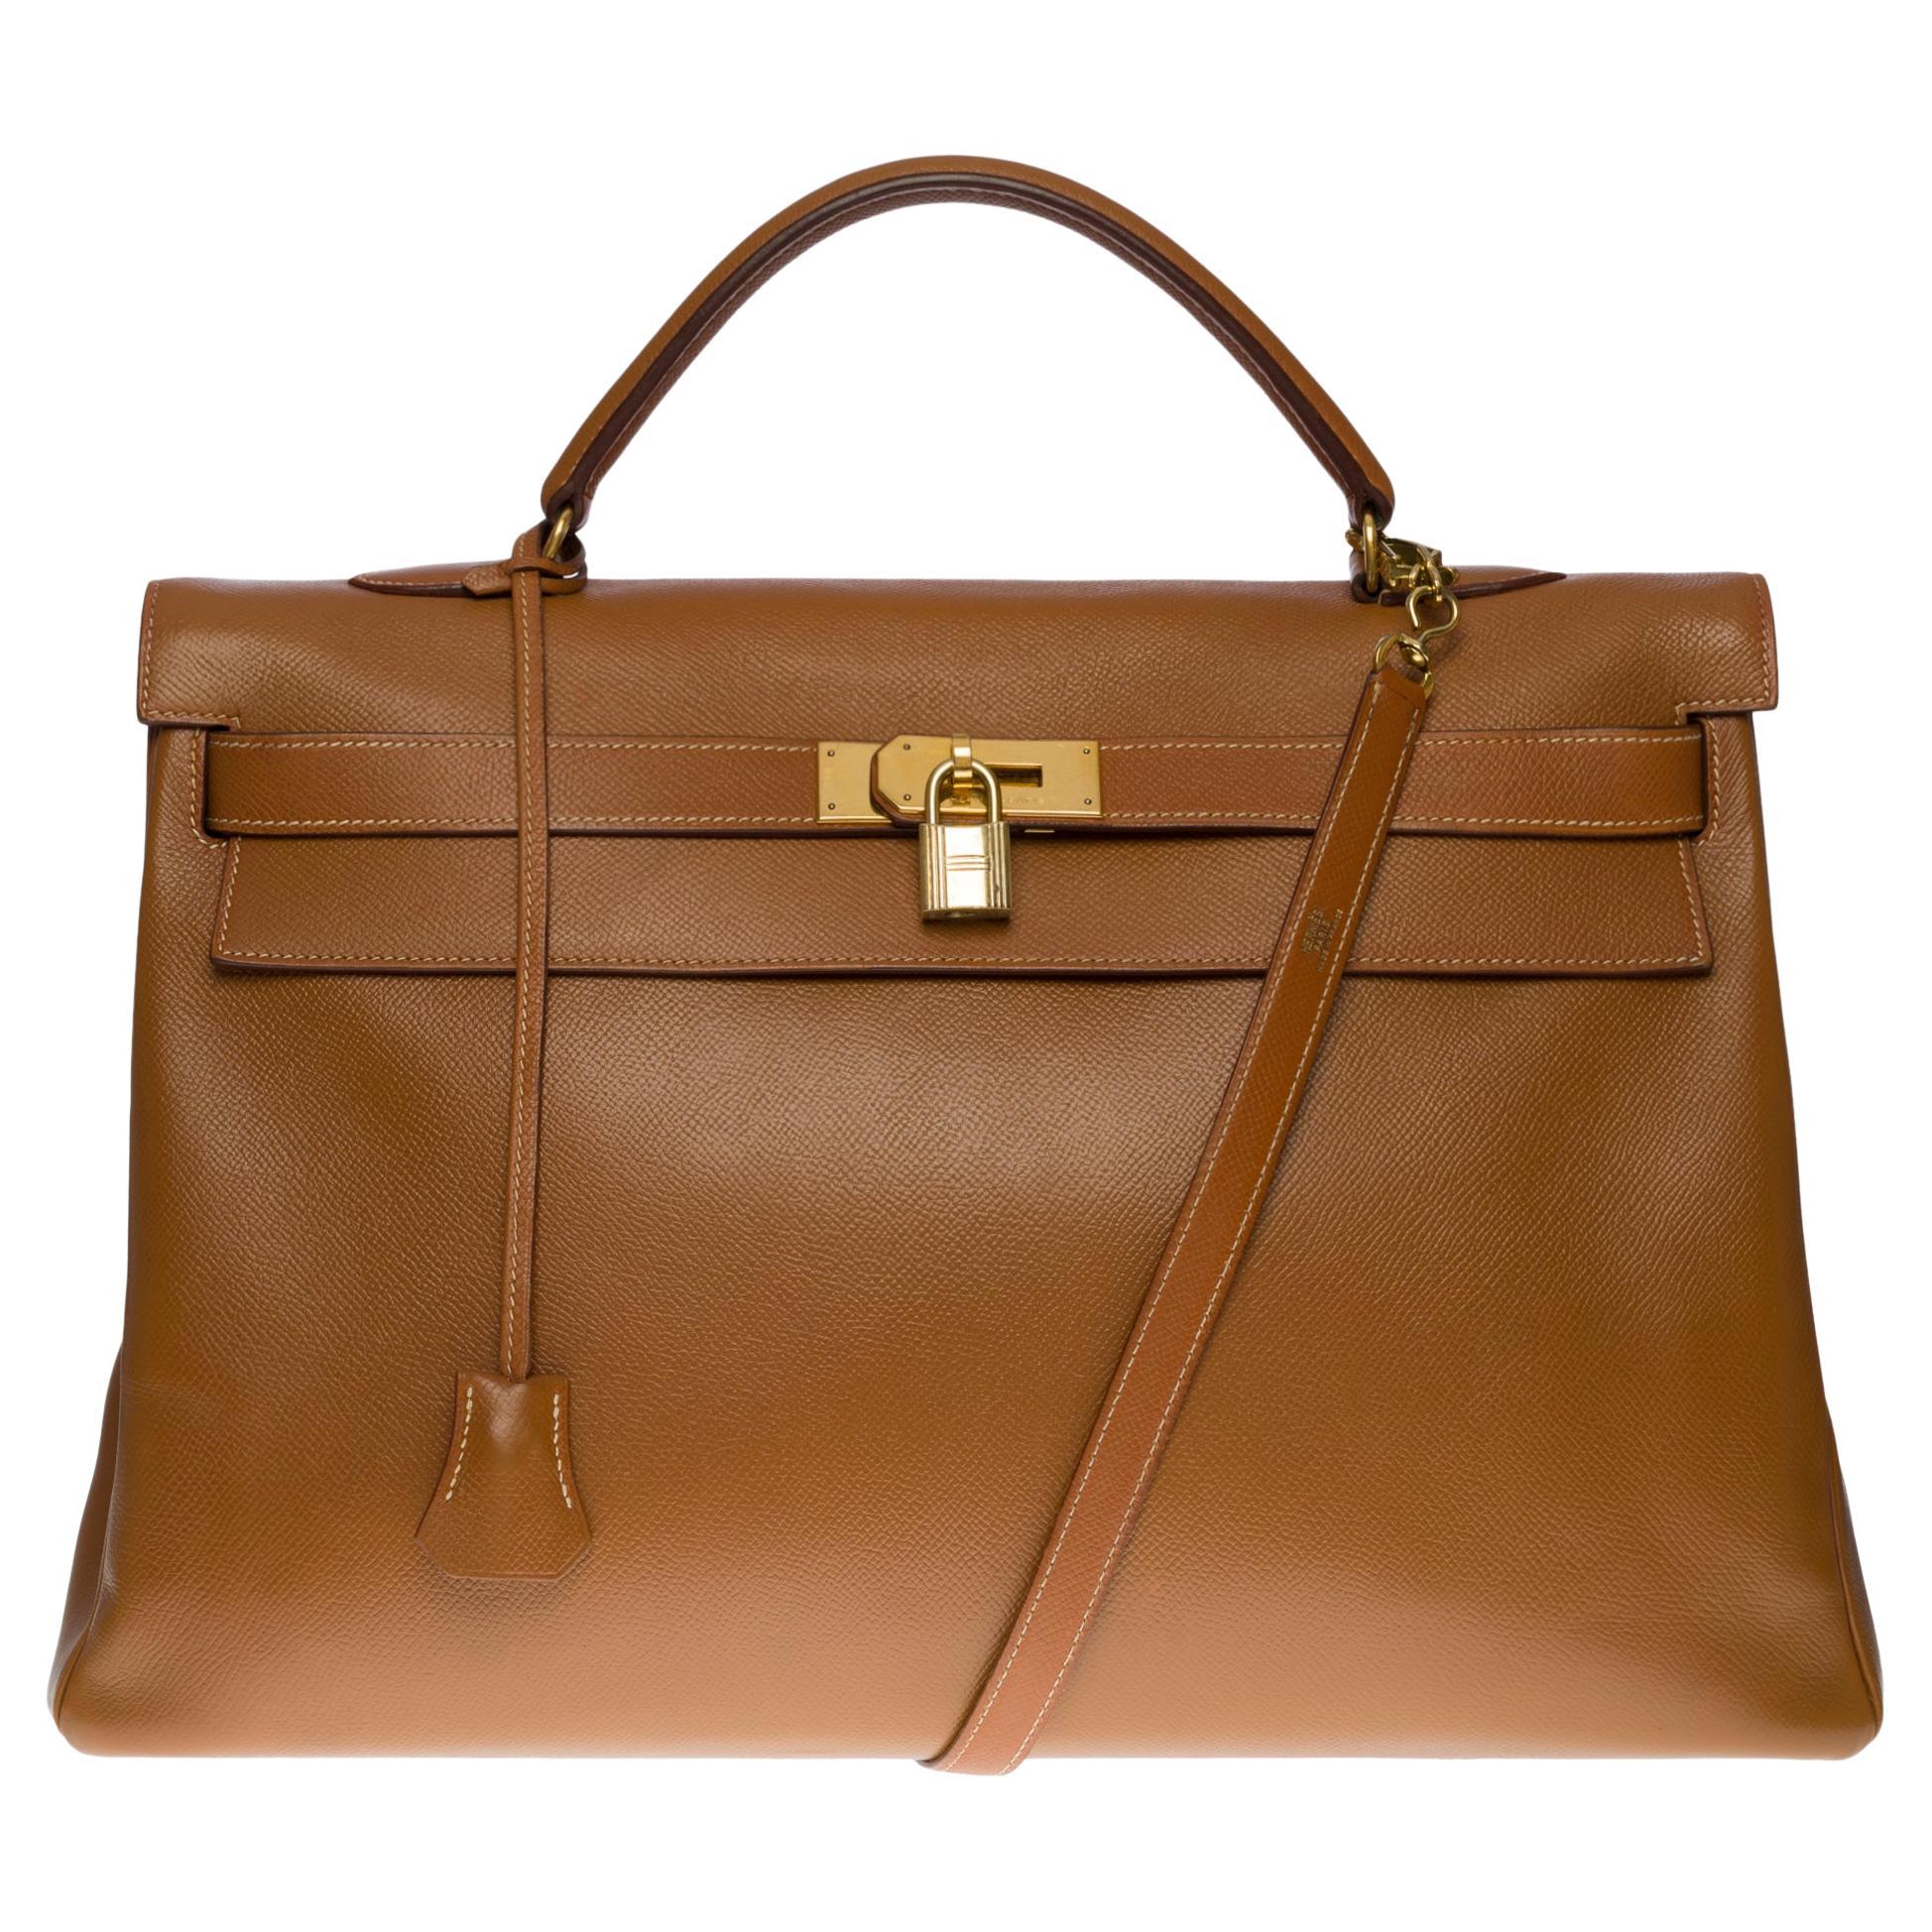 Hermes Kelly 40 retourne handbag strap in Gold Courchevel leather, GHW